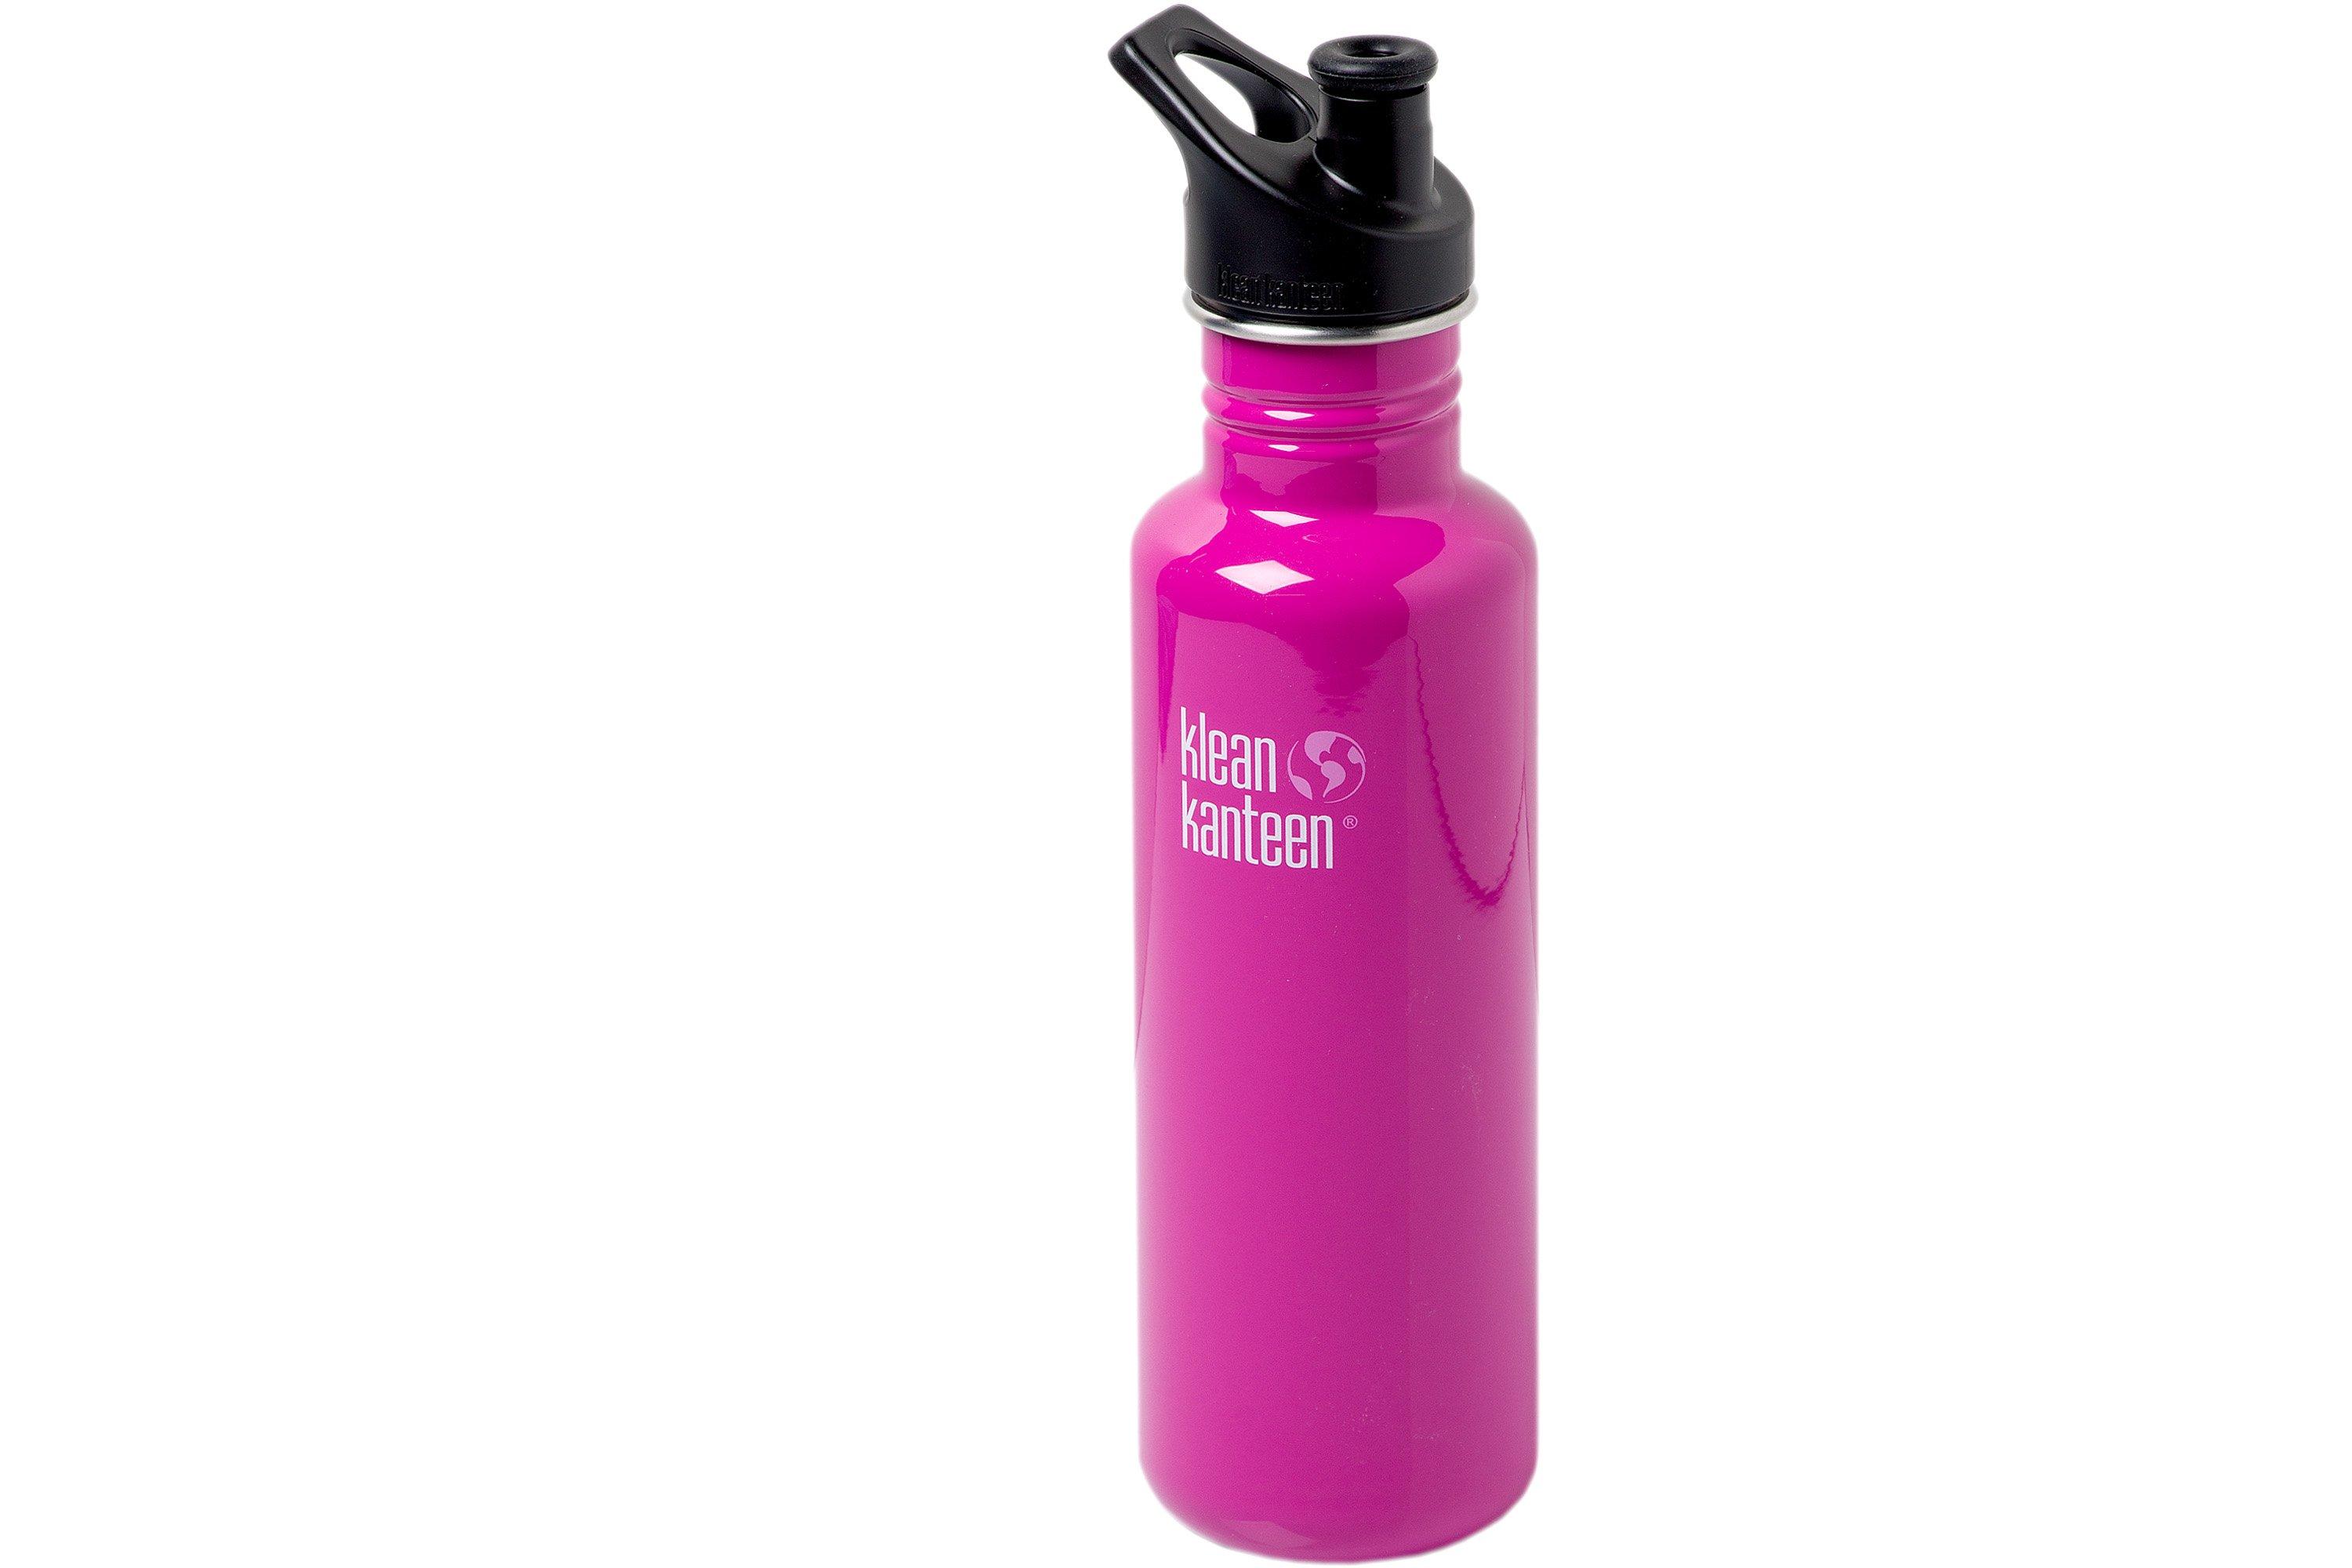 Botella de Agua Orchid Pink